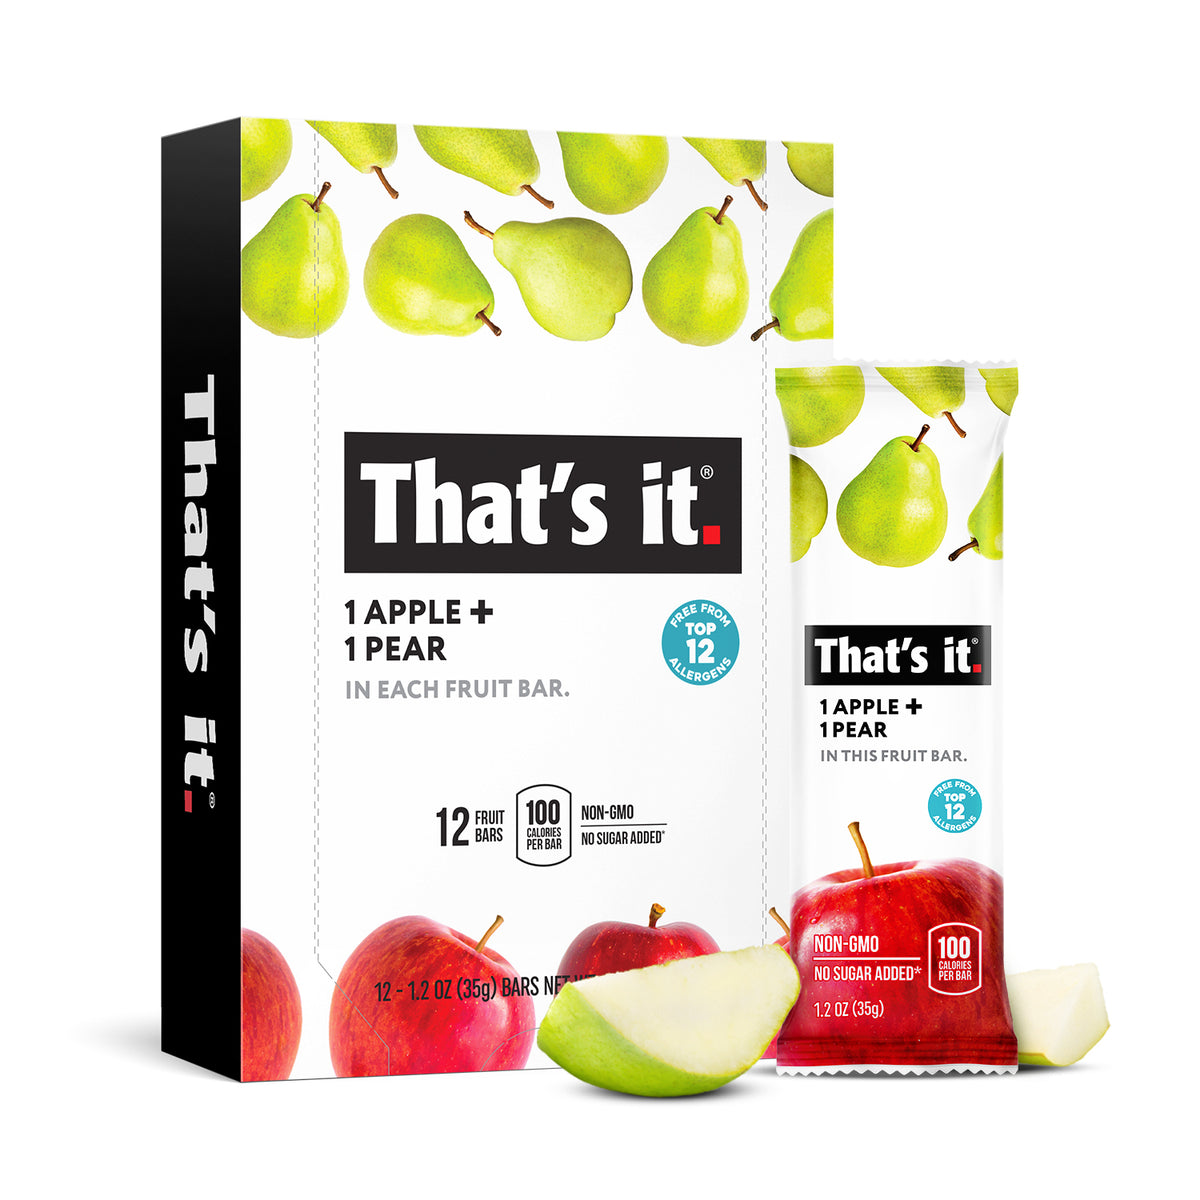 12 count box of Apple + Pear plus single bar